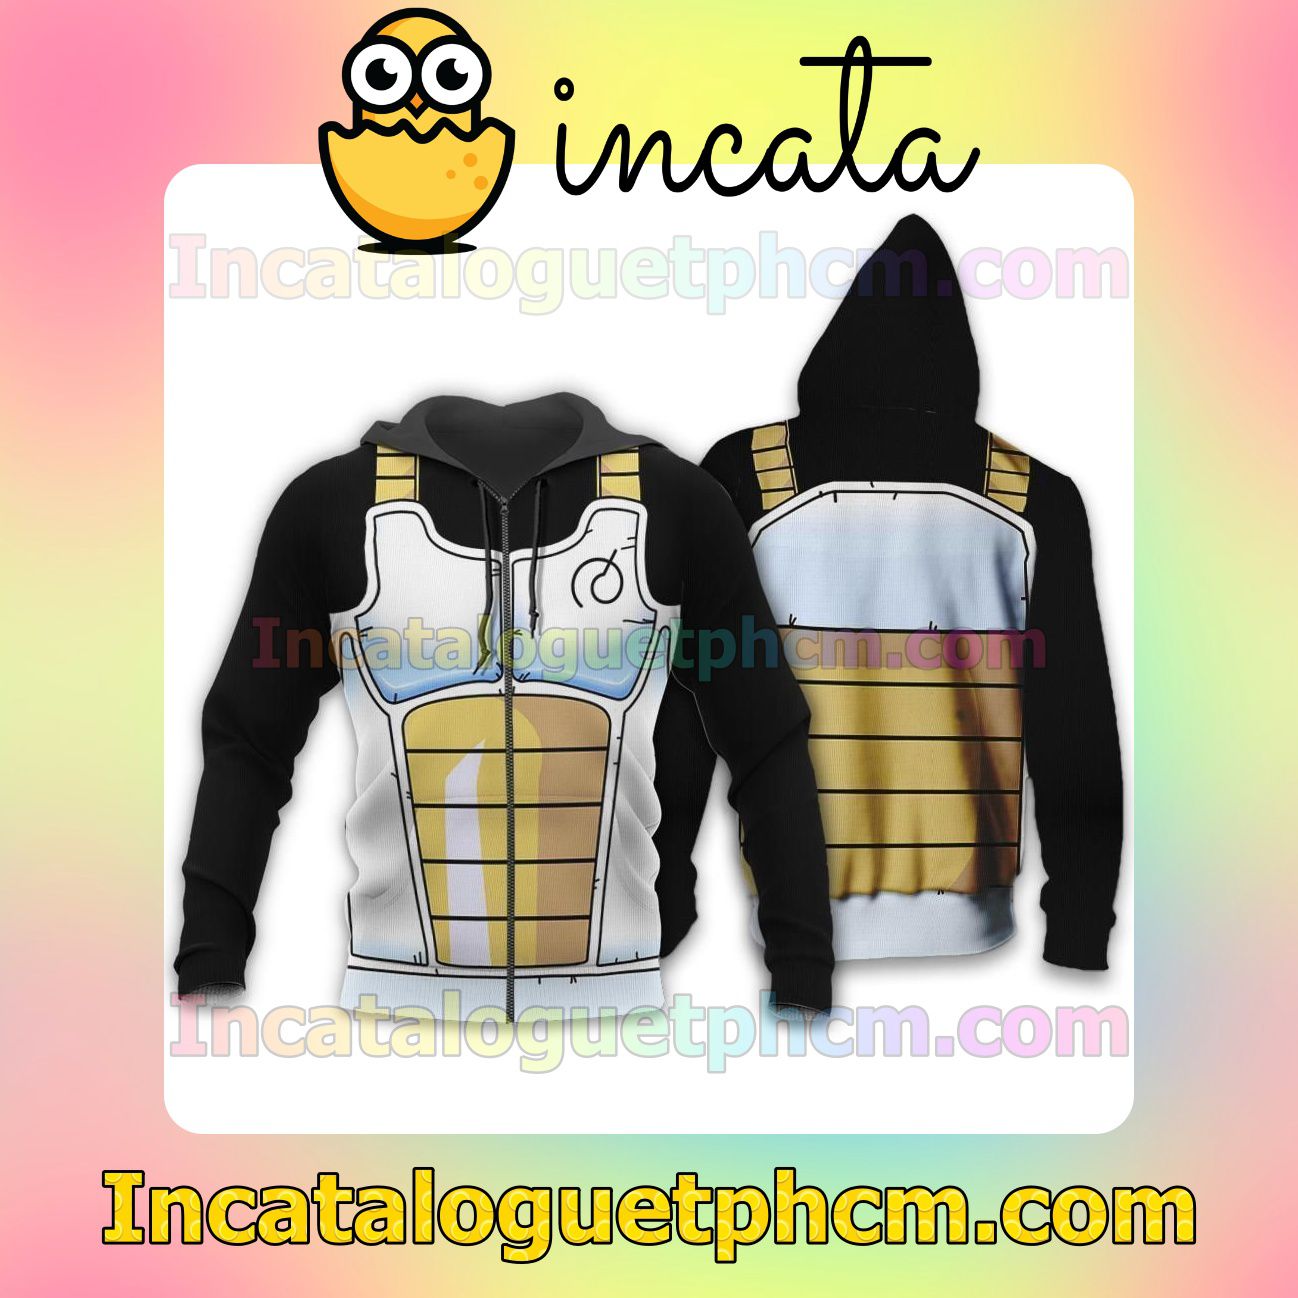 Vegeta Saiyan Battle Armor Dragon Ball Super Apparel Clothing Merch Zip Hoodie Jacket Shirts